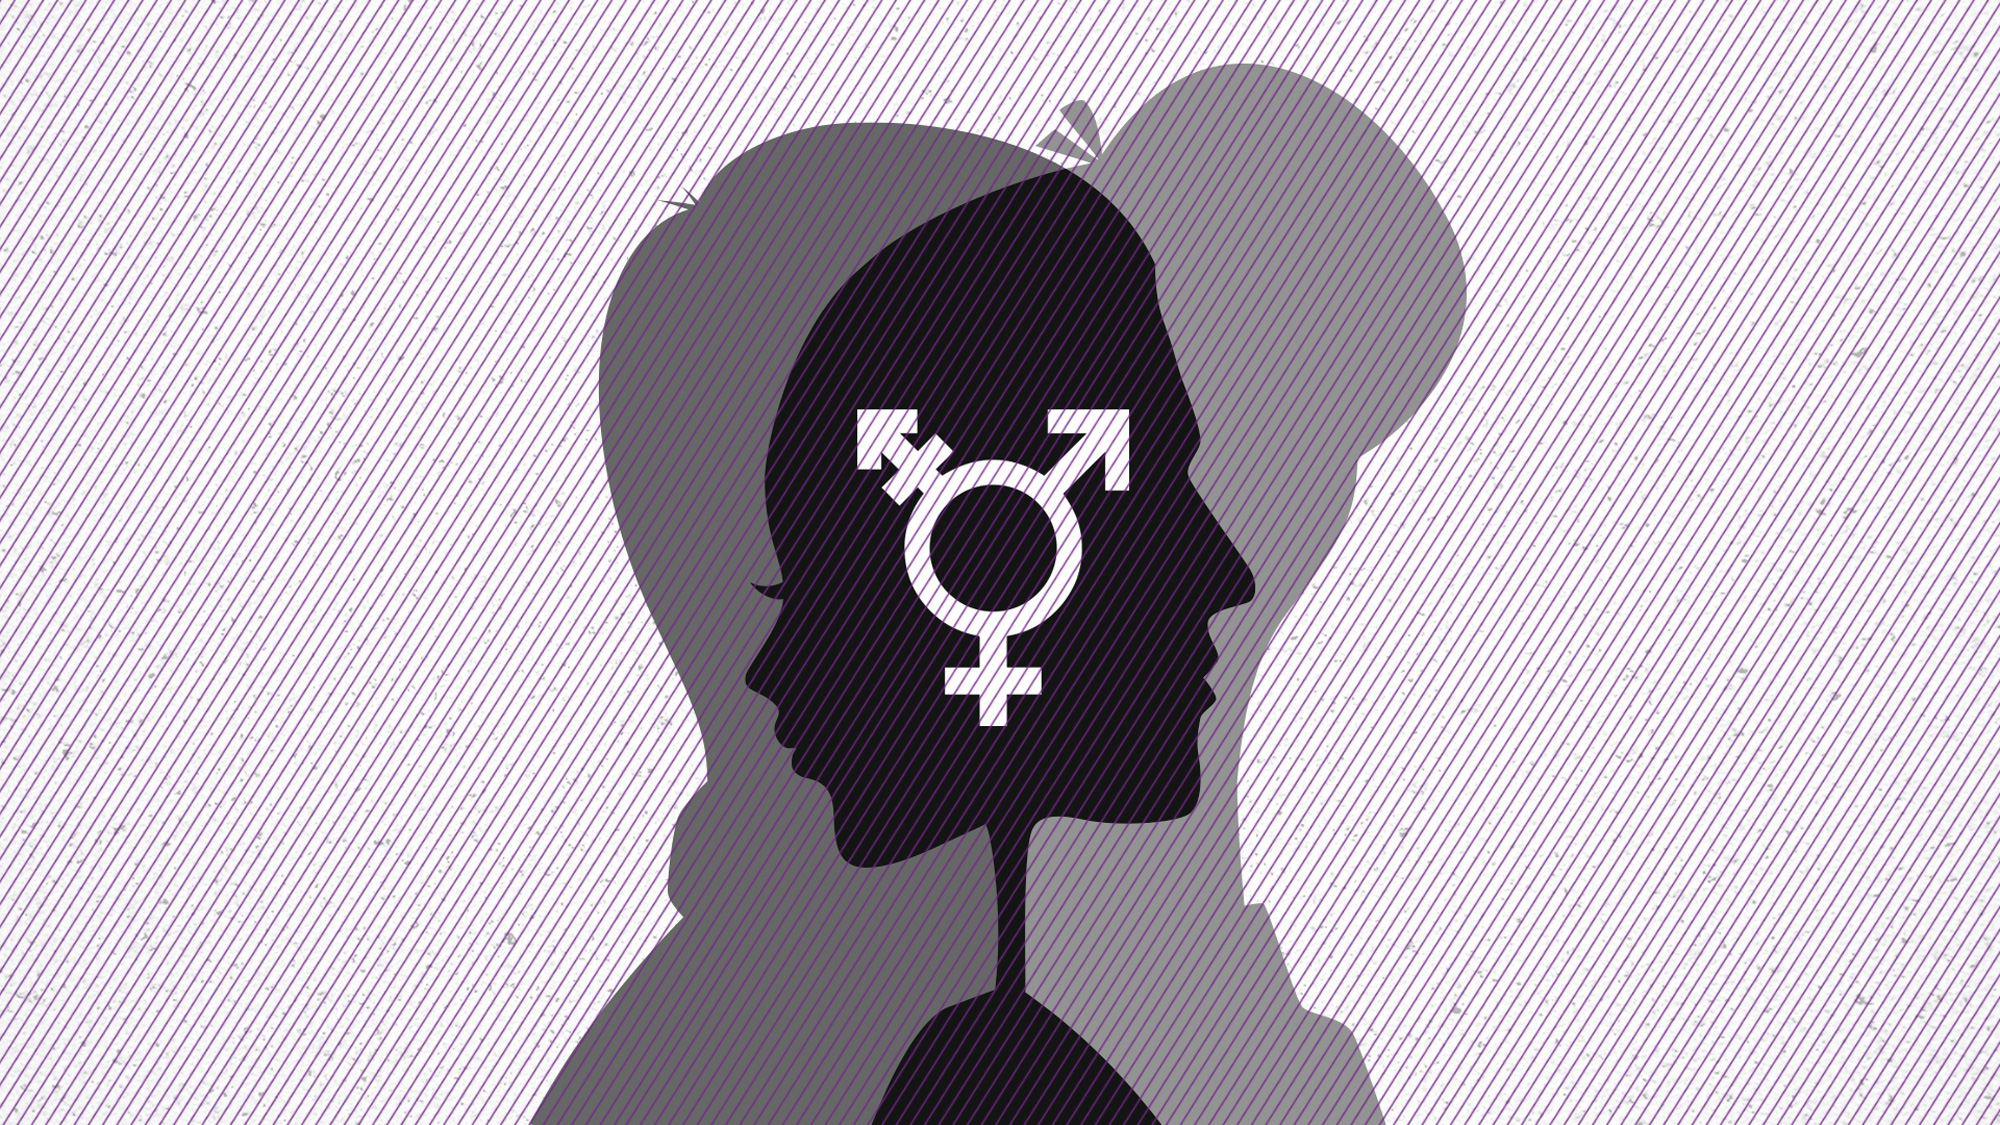 When a bill against gender discrimination is discriminatory